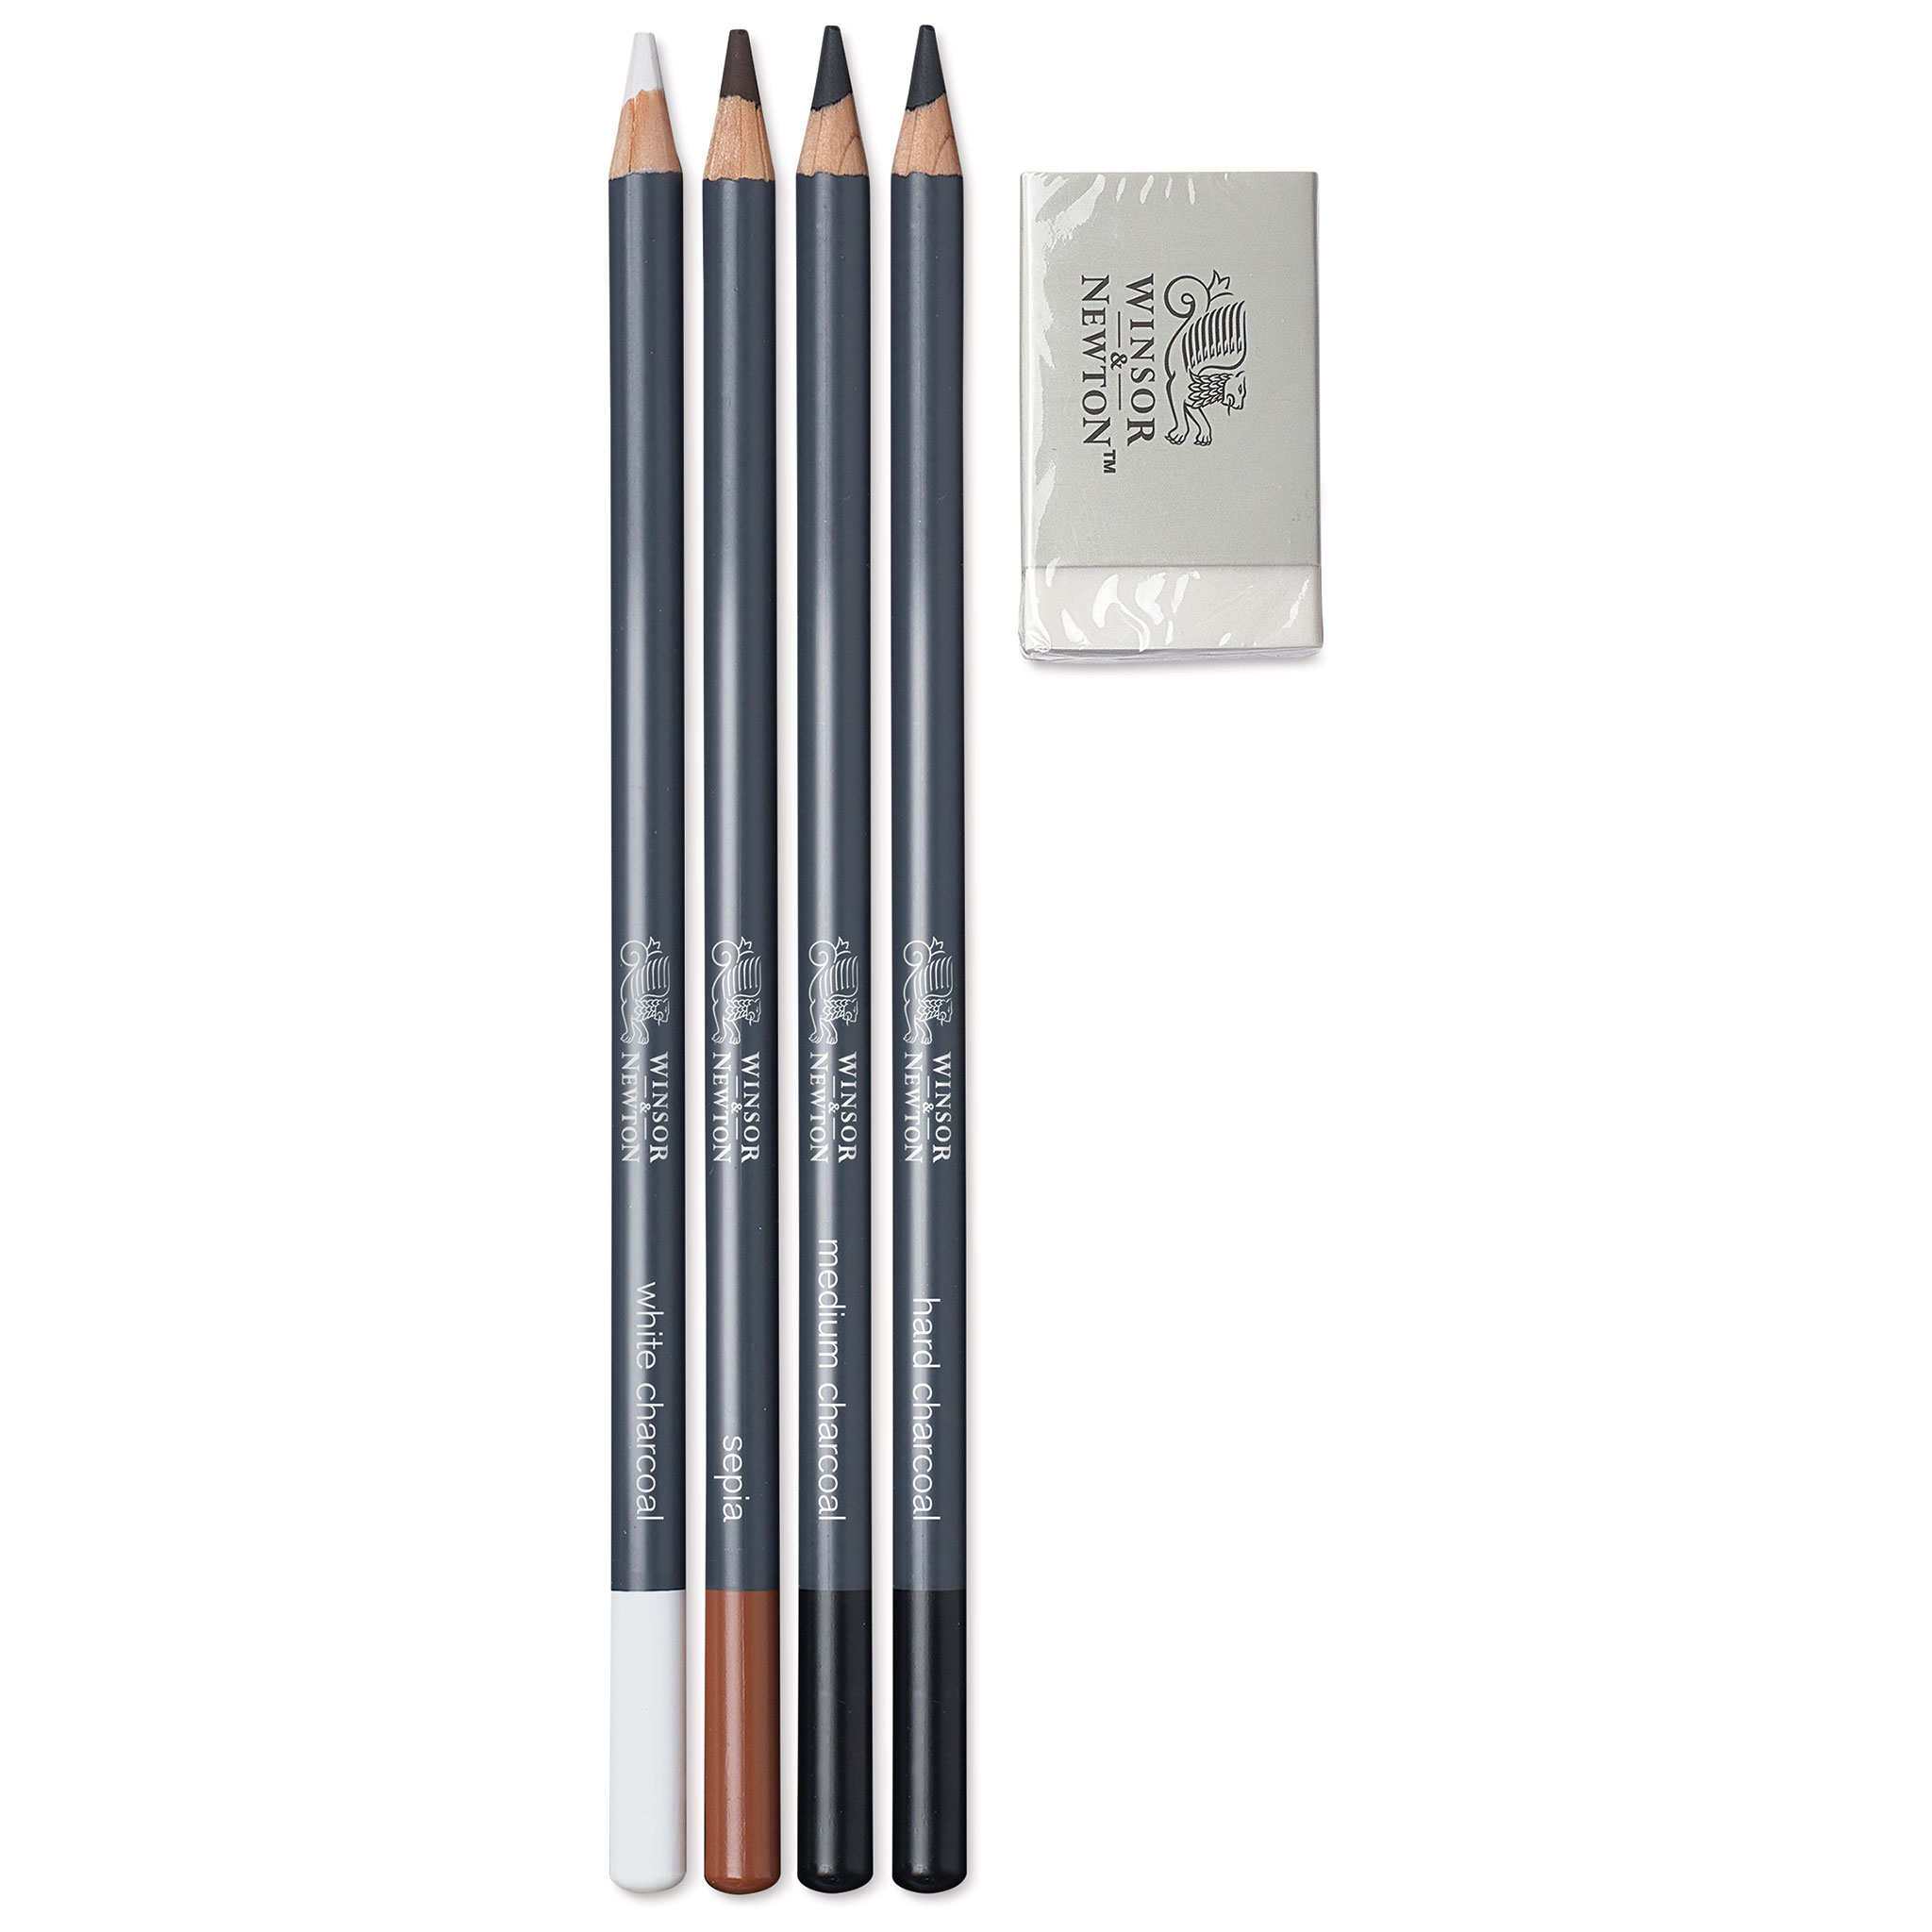 Winsor & Newton Studio Collection Sketching Pencil Sets